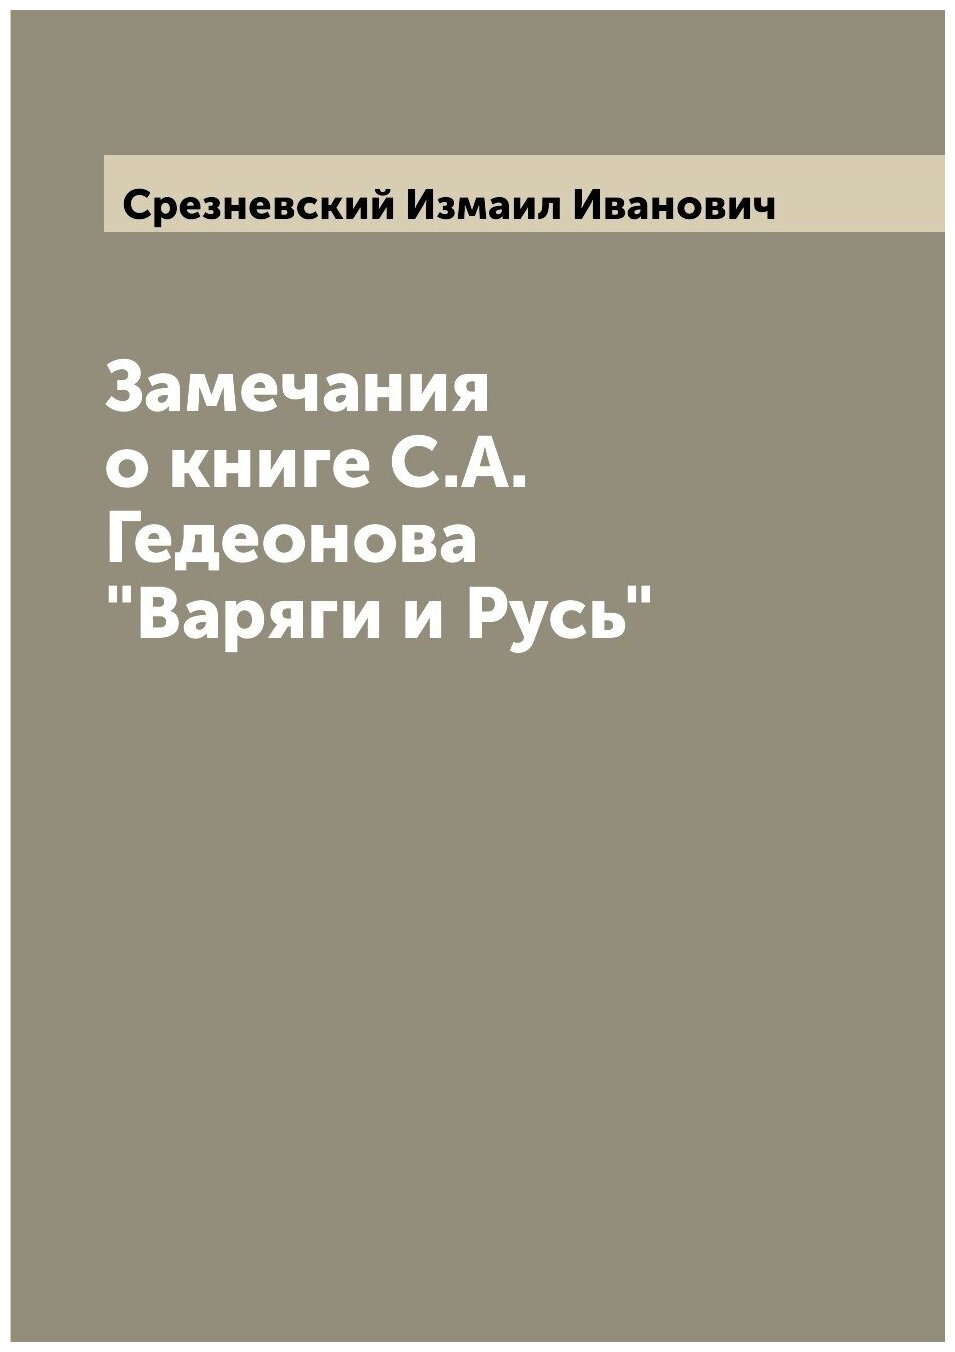 Замечания о книге С. А. Гедеонова "Варяги и Русь"